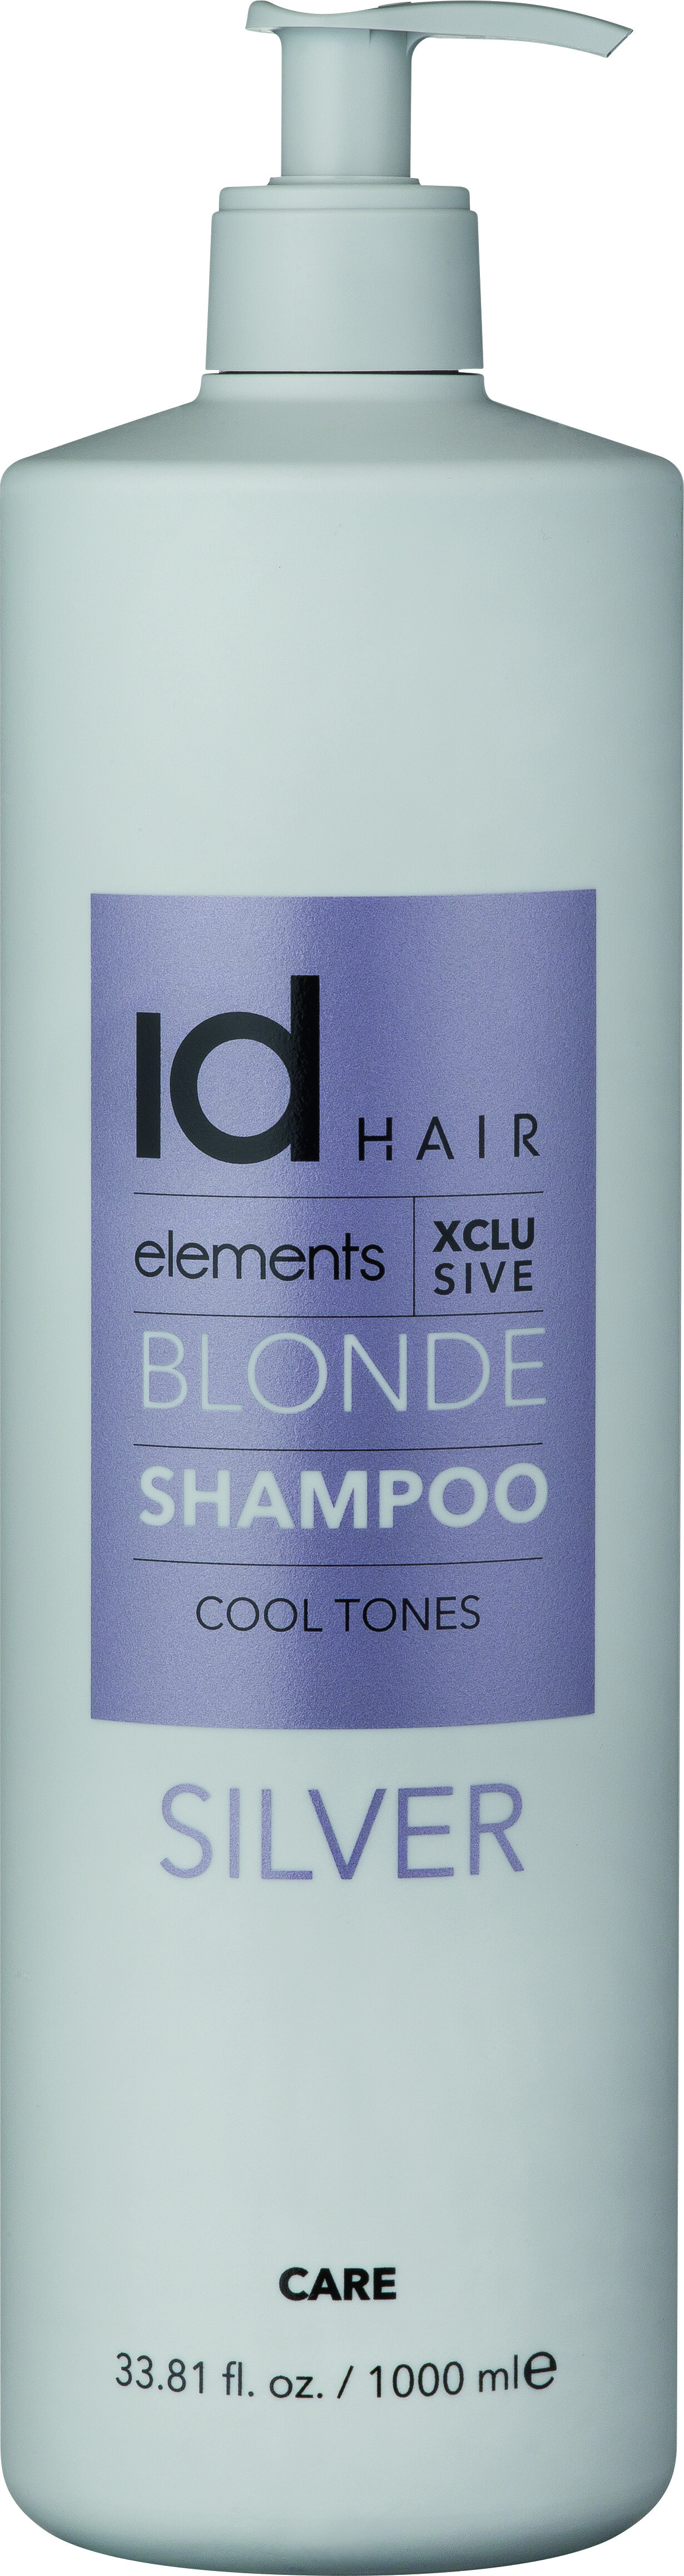 Billede af Id Hair - Elements Xclusive Blonde Silver Shampoo 1000 Ml